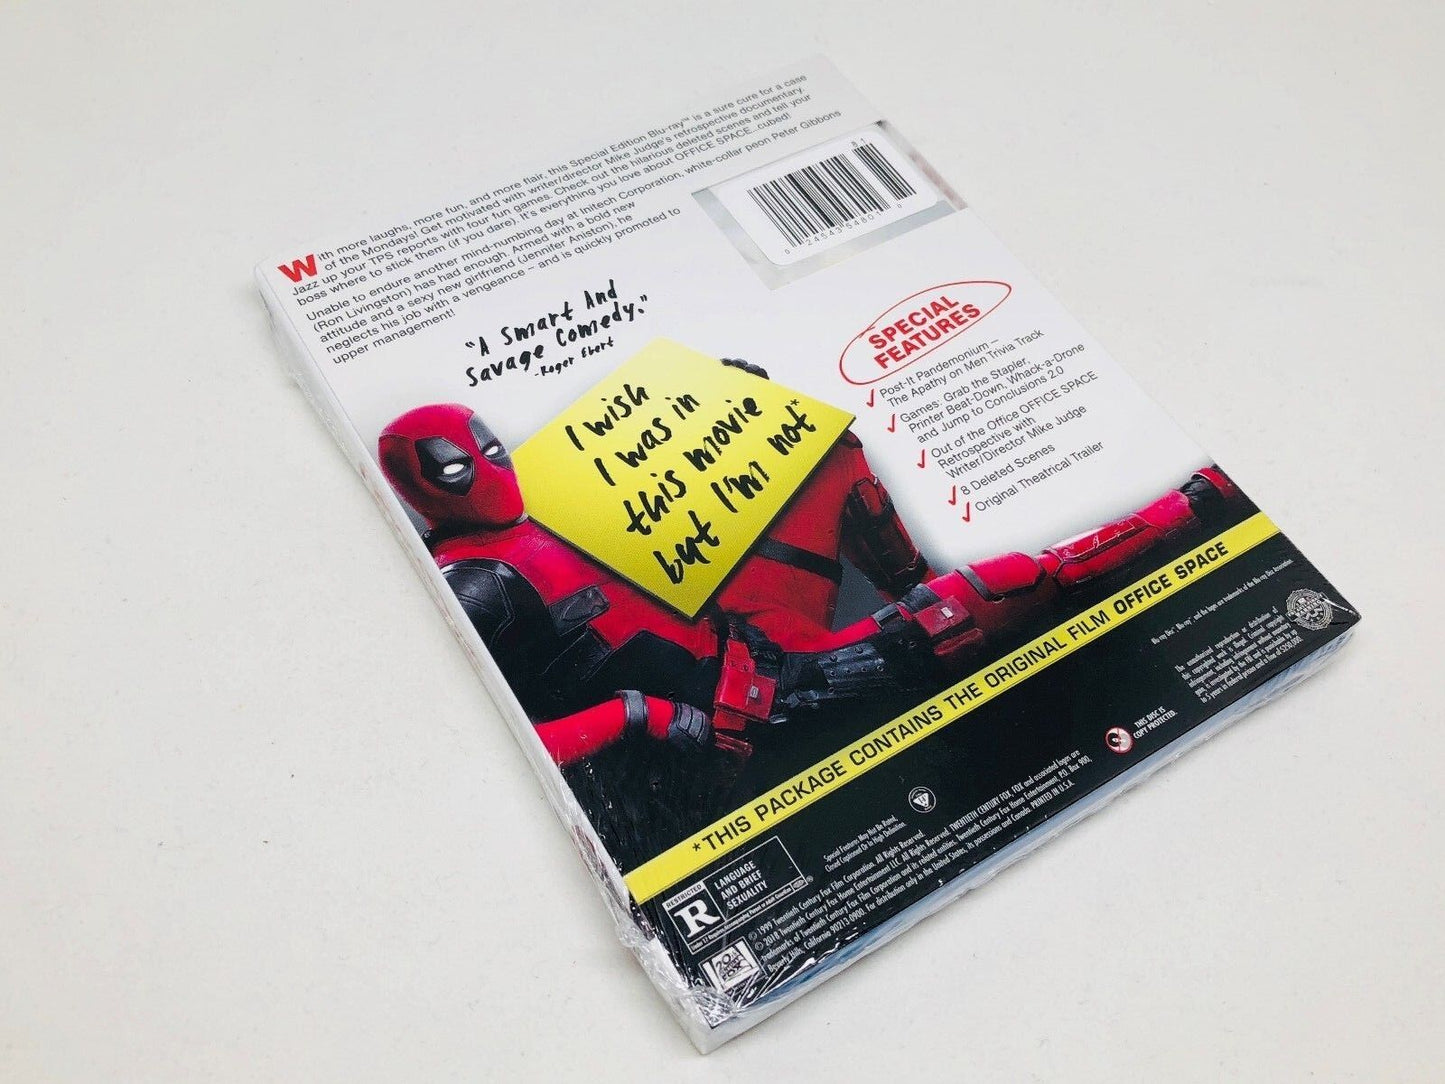 Office Space Blu-Ray - Deadpool Photobomb Walmart Exclusive & Movie Cash